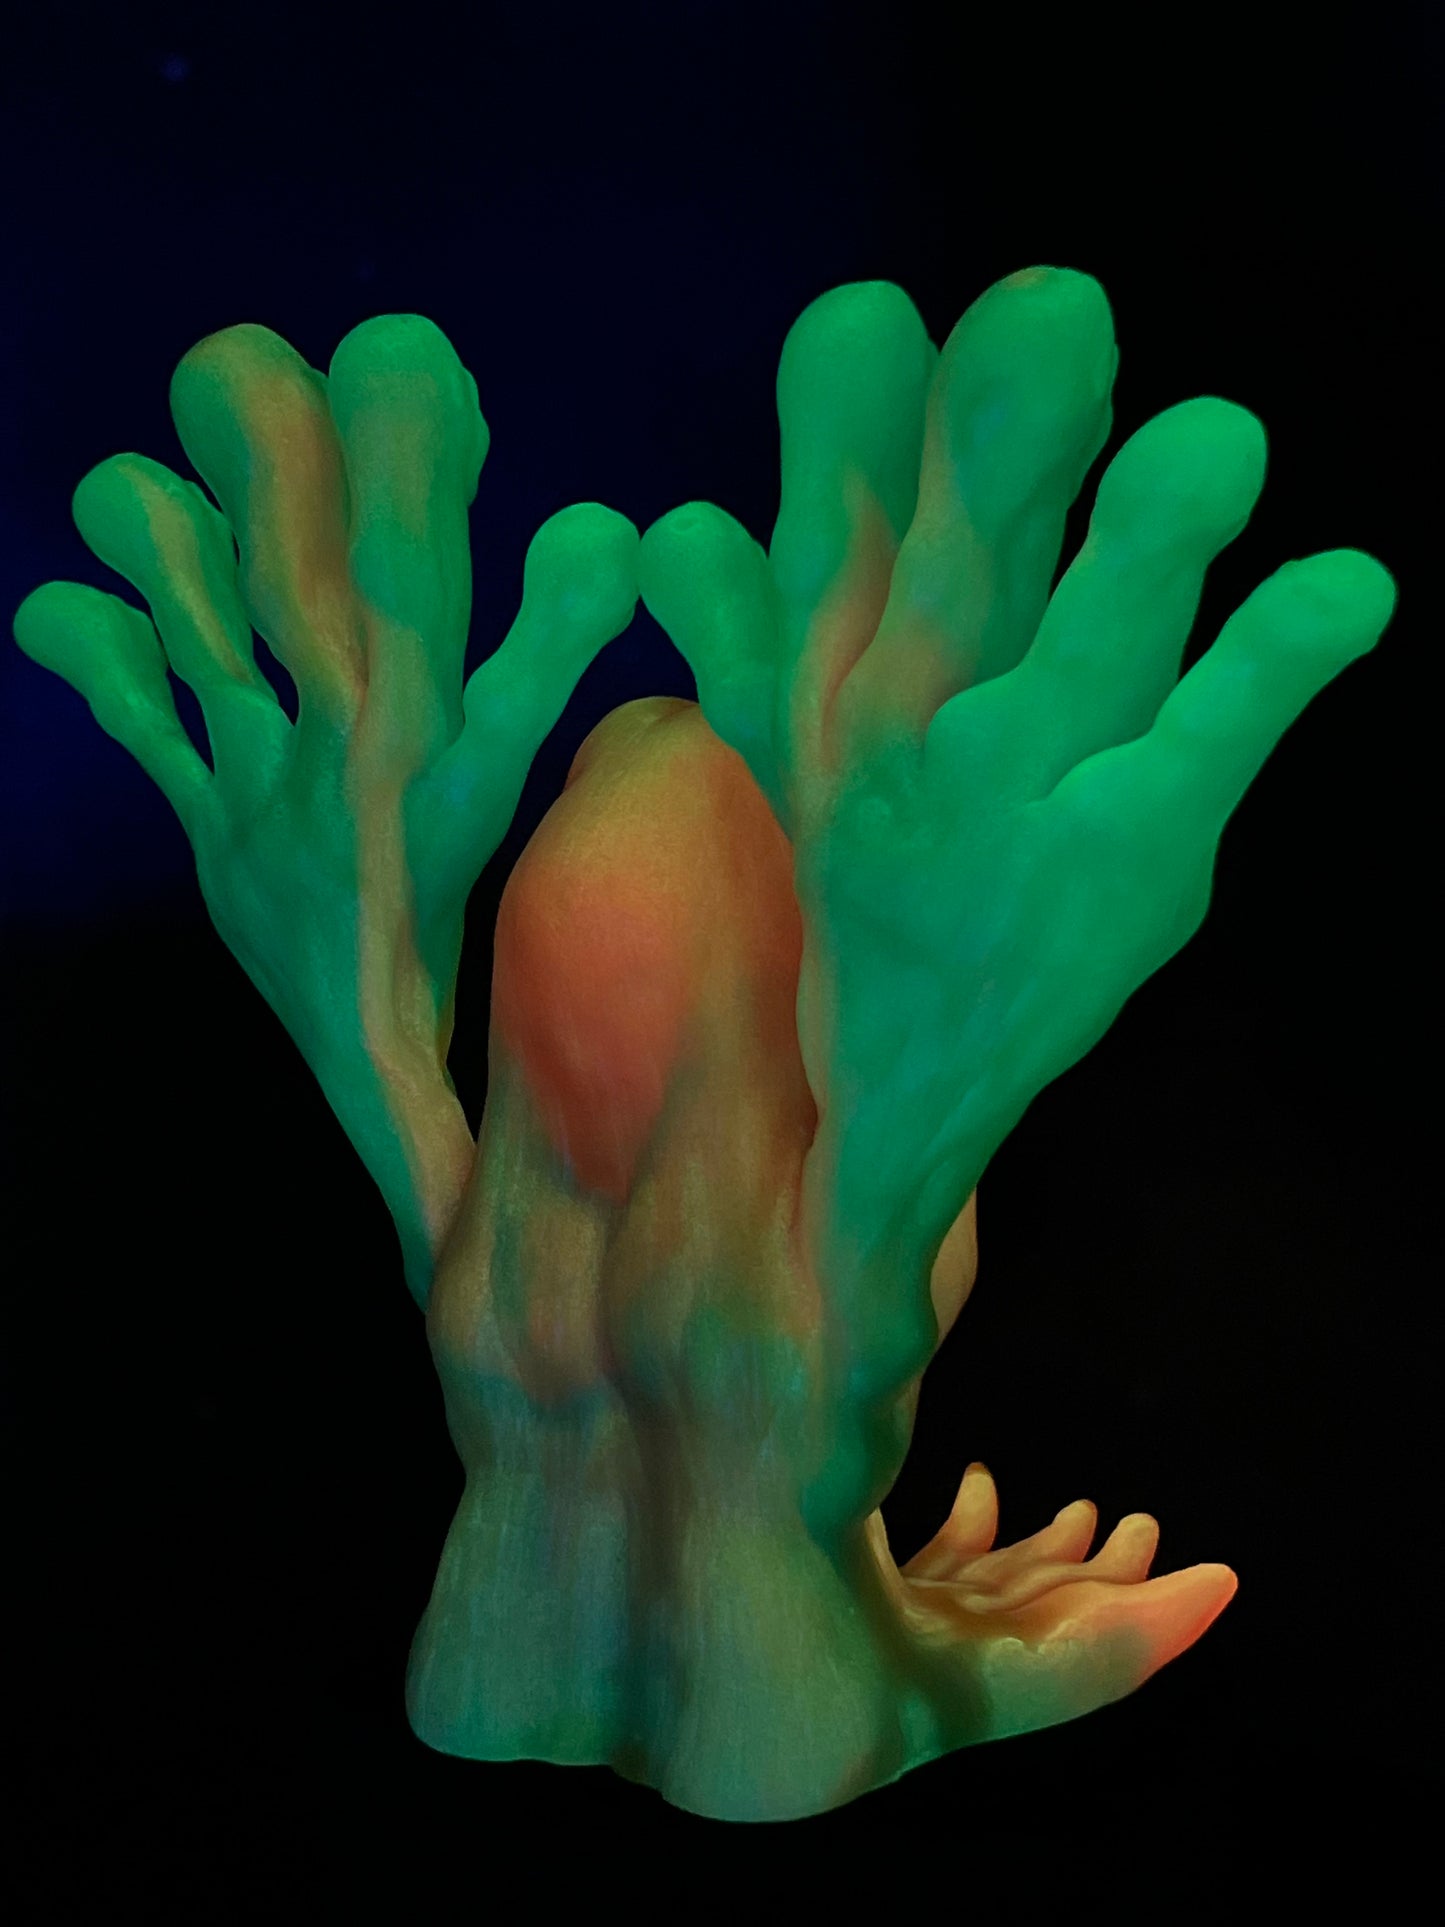 Ape Fingers Beast: Glow in the Dark Interdimensional Marbled